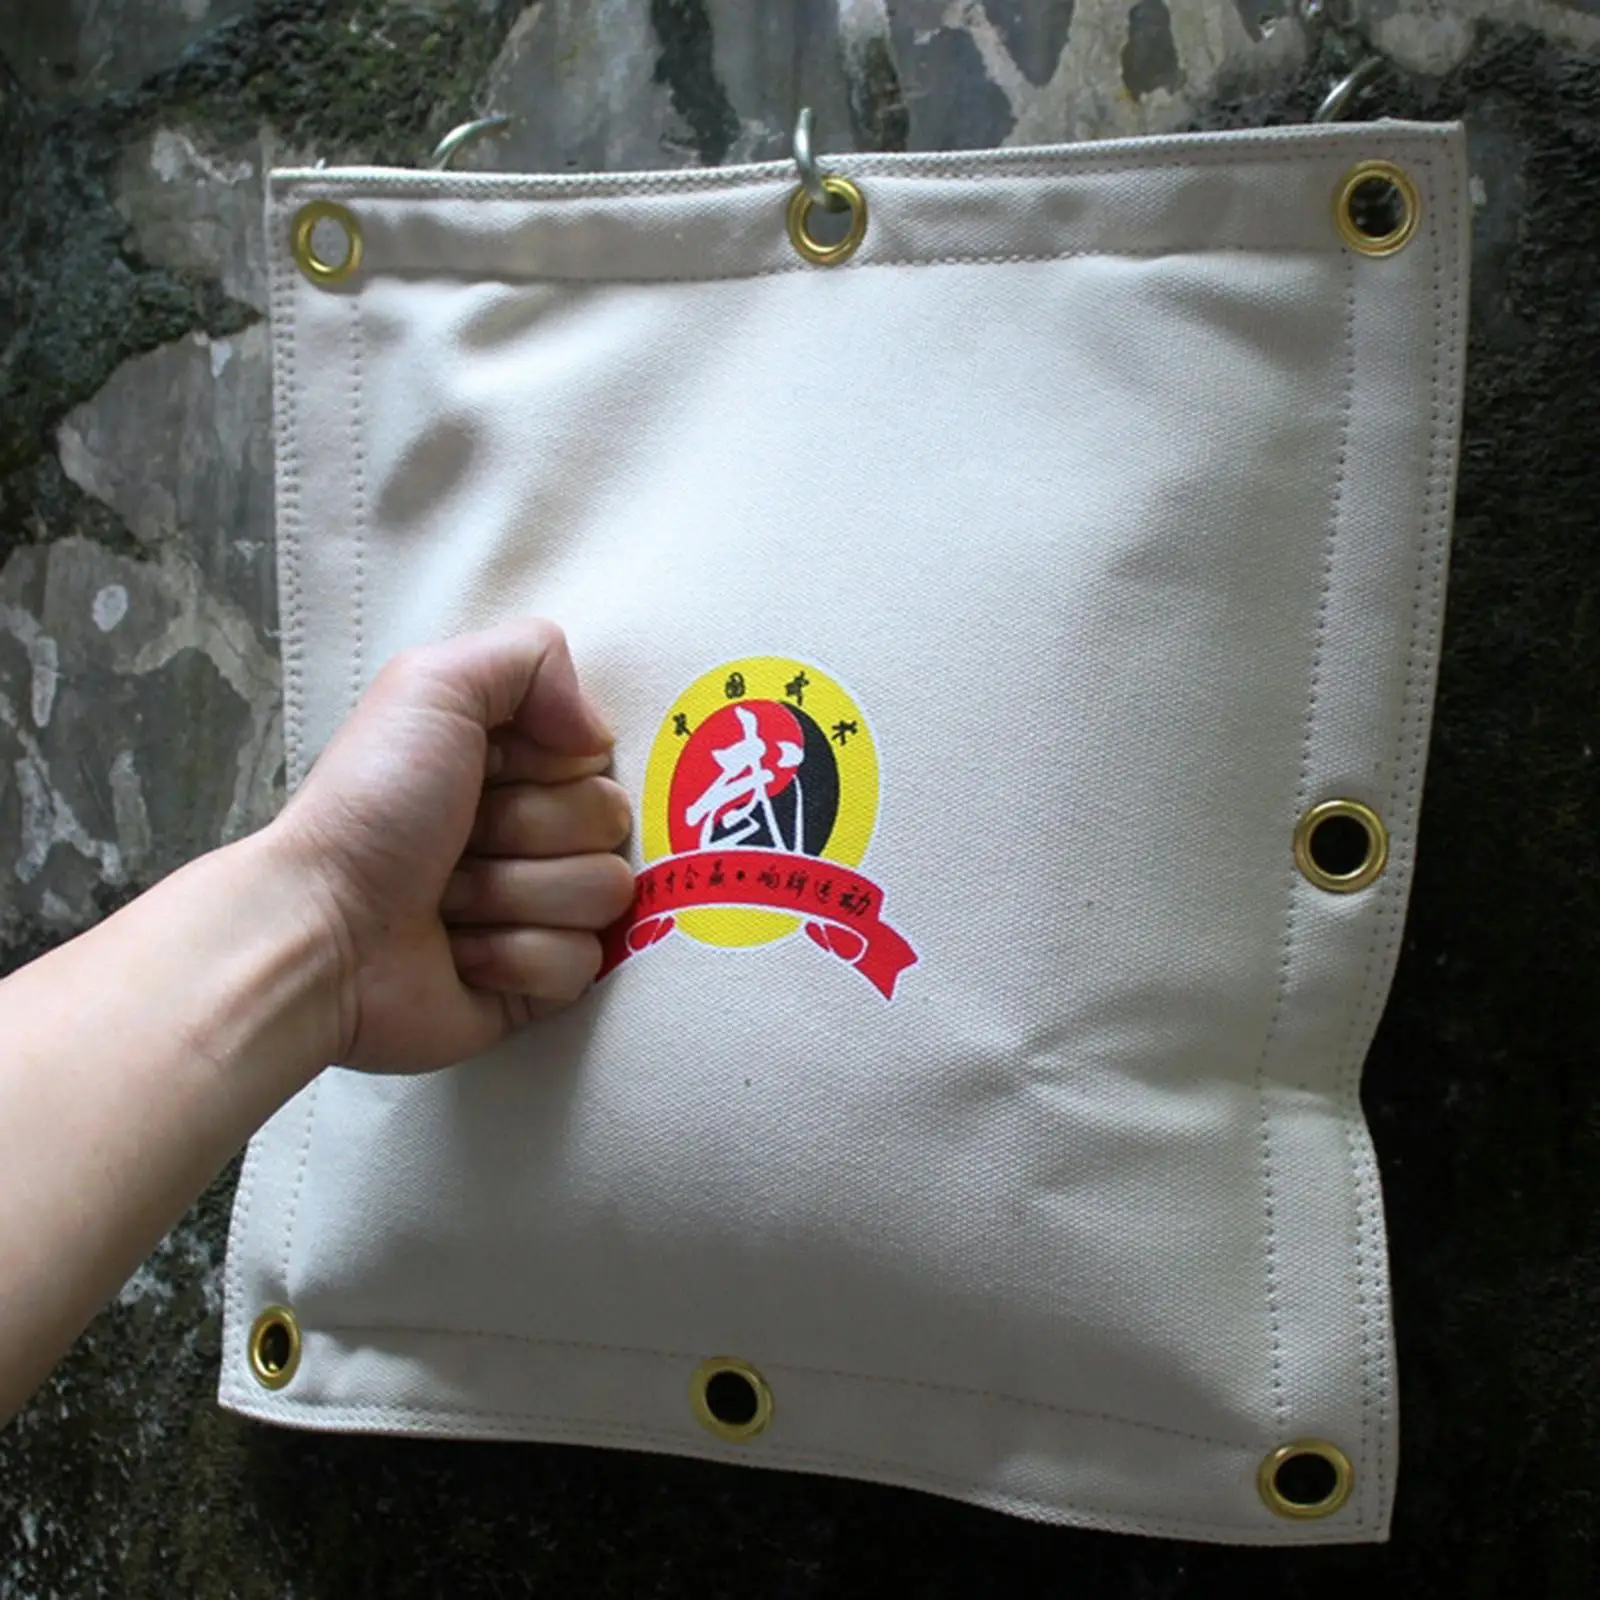 Wall Sandbag Martial Striking Bag & Zipper Taekwondo for Patio